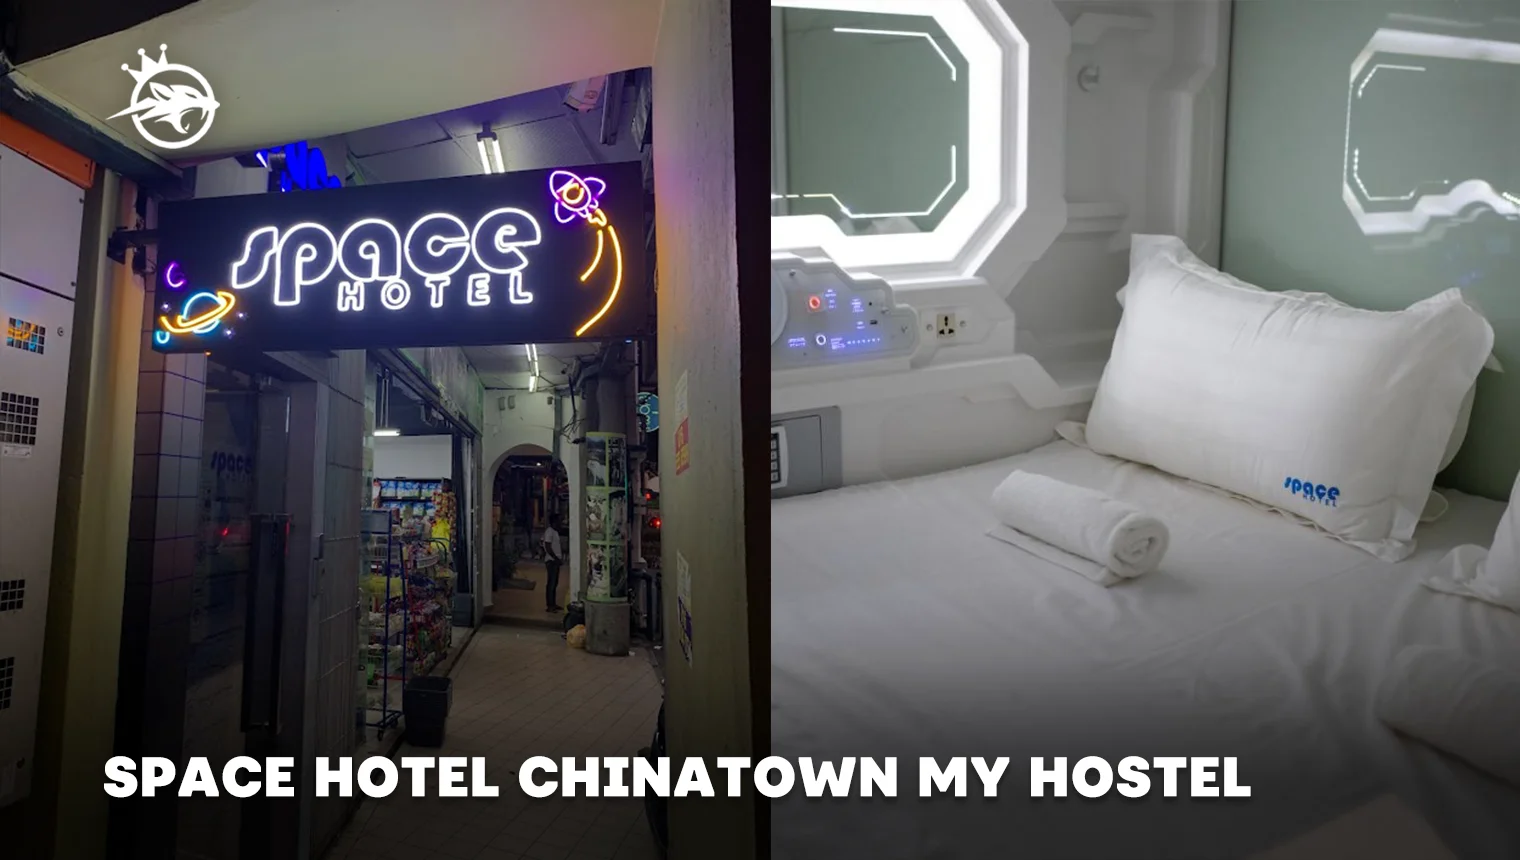 Space Hotel Chinatown my hostel